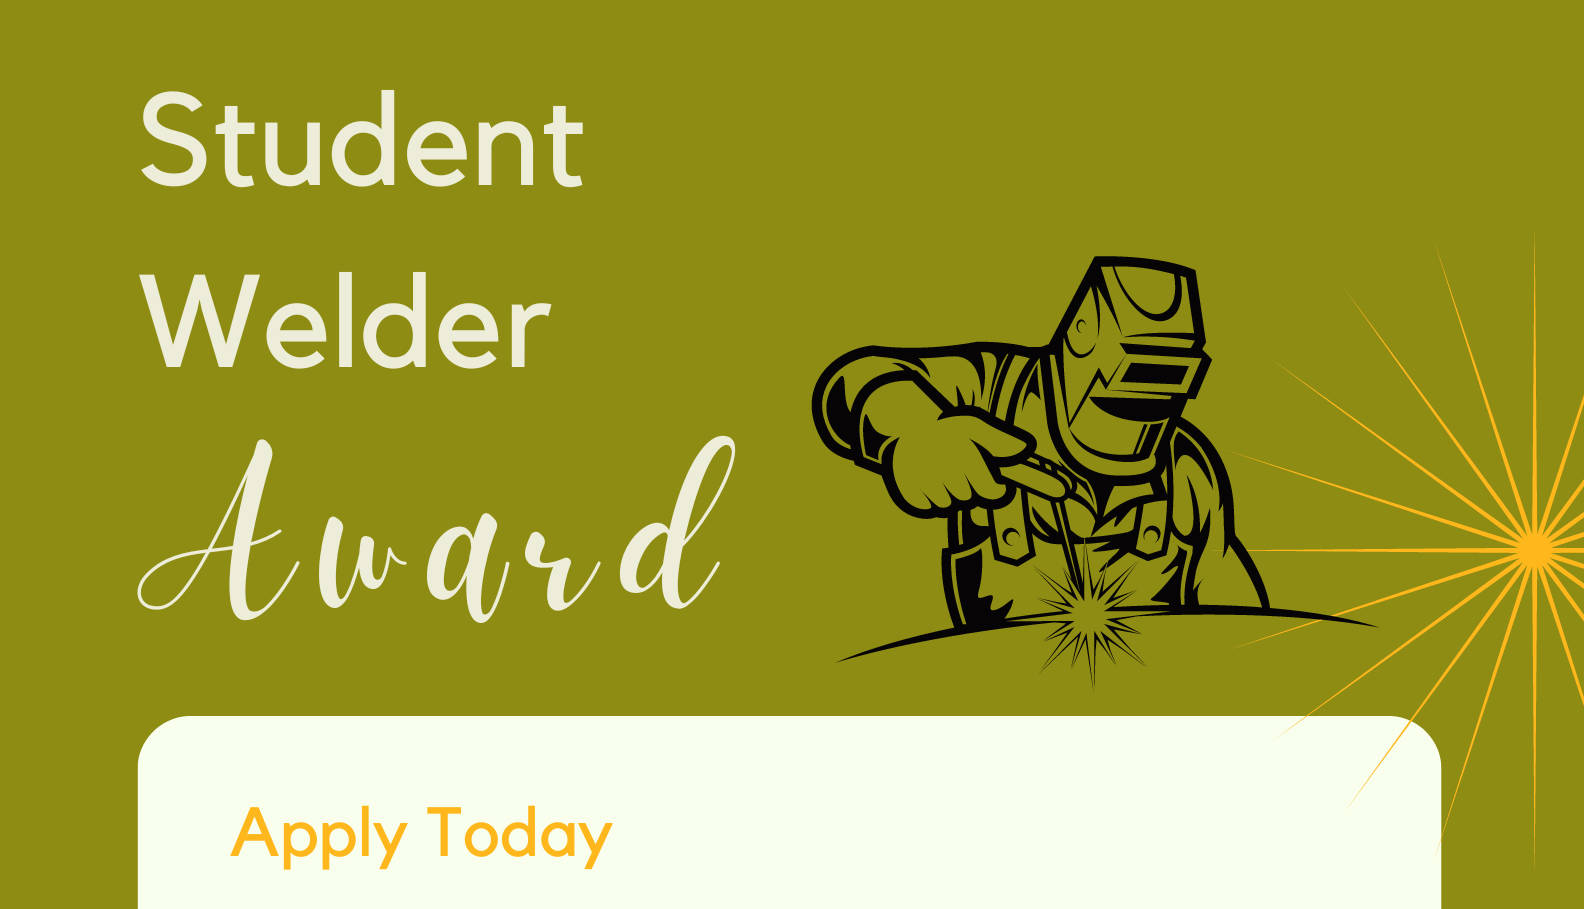 Student Welder Award